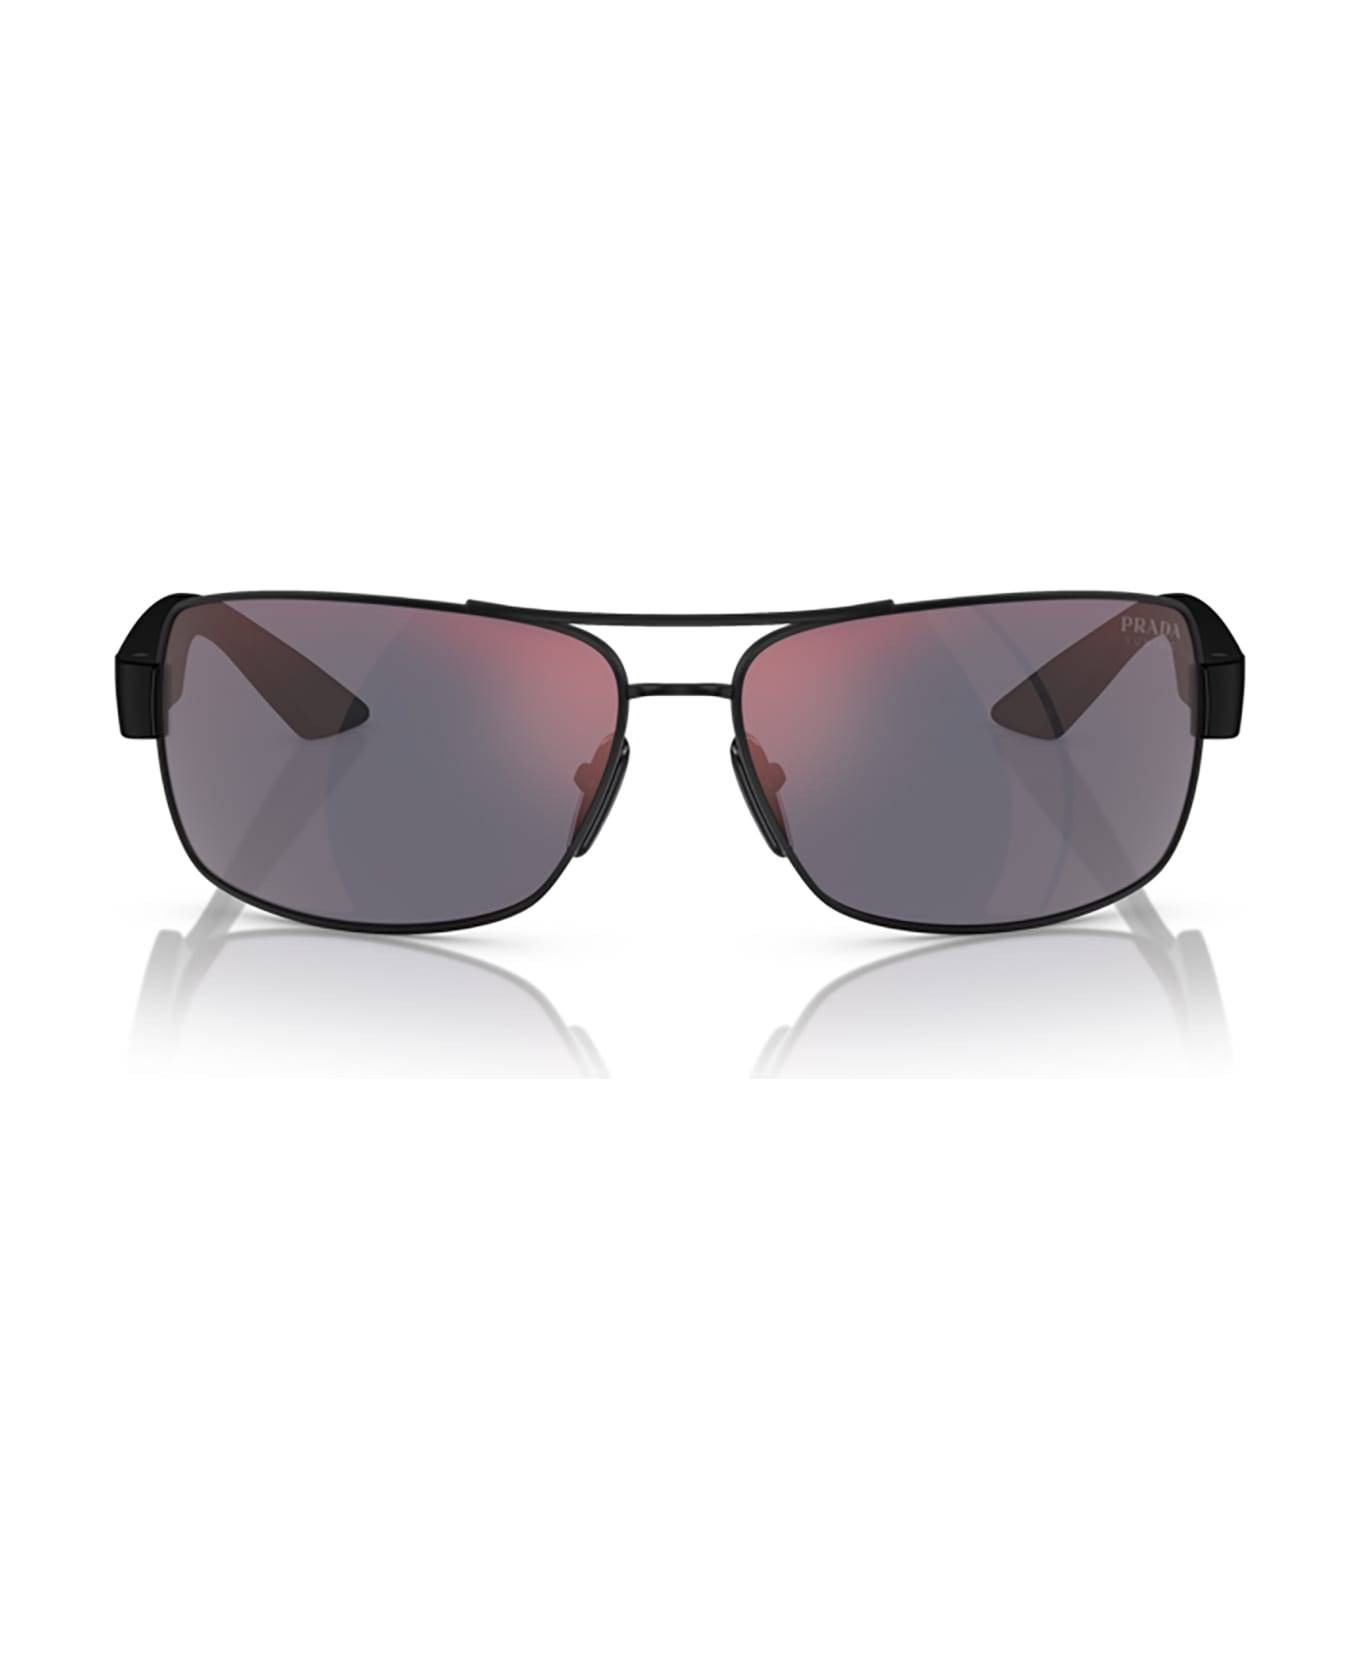 Prada Linea Rossa Ps 50zs Matte Black Sunglasses - Matte Black